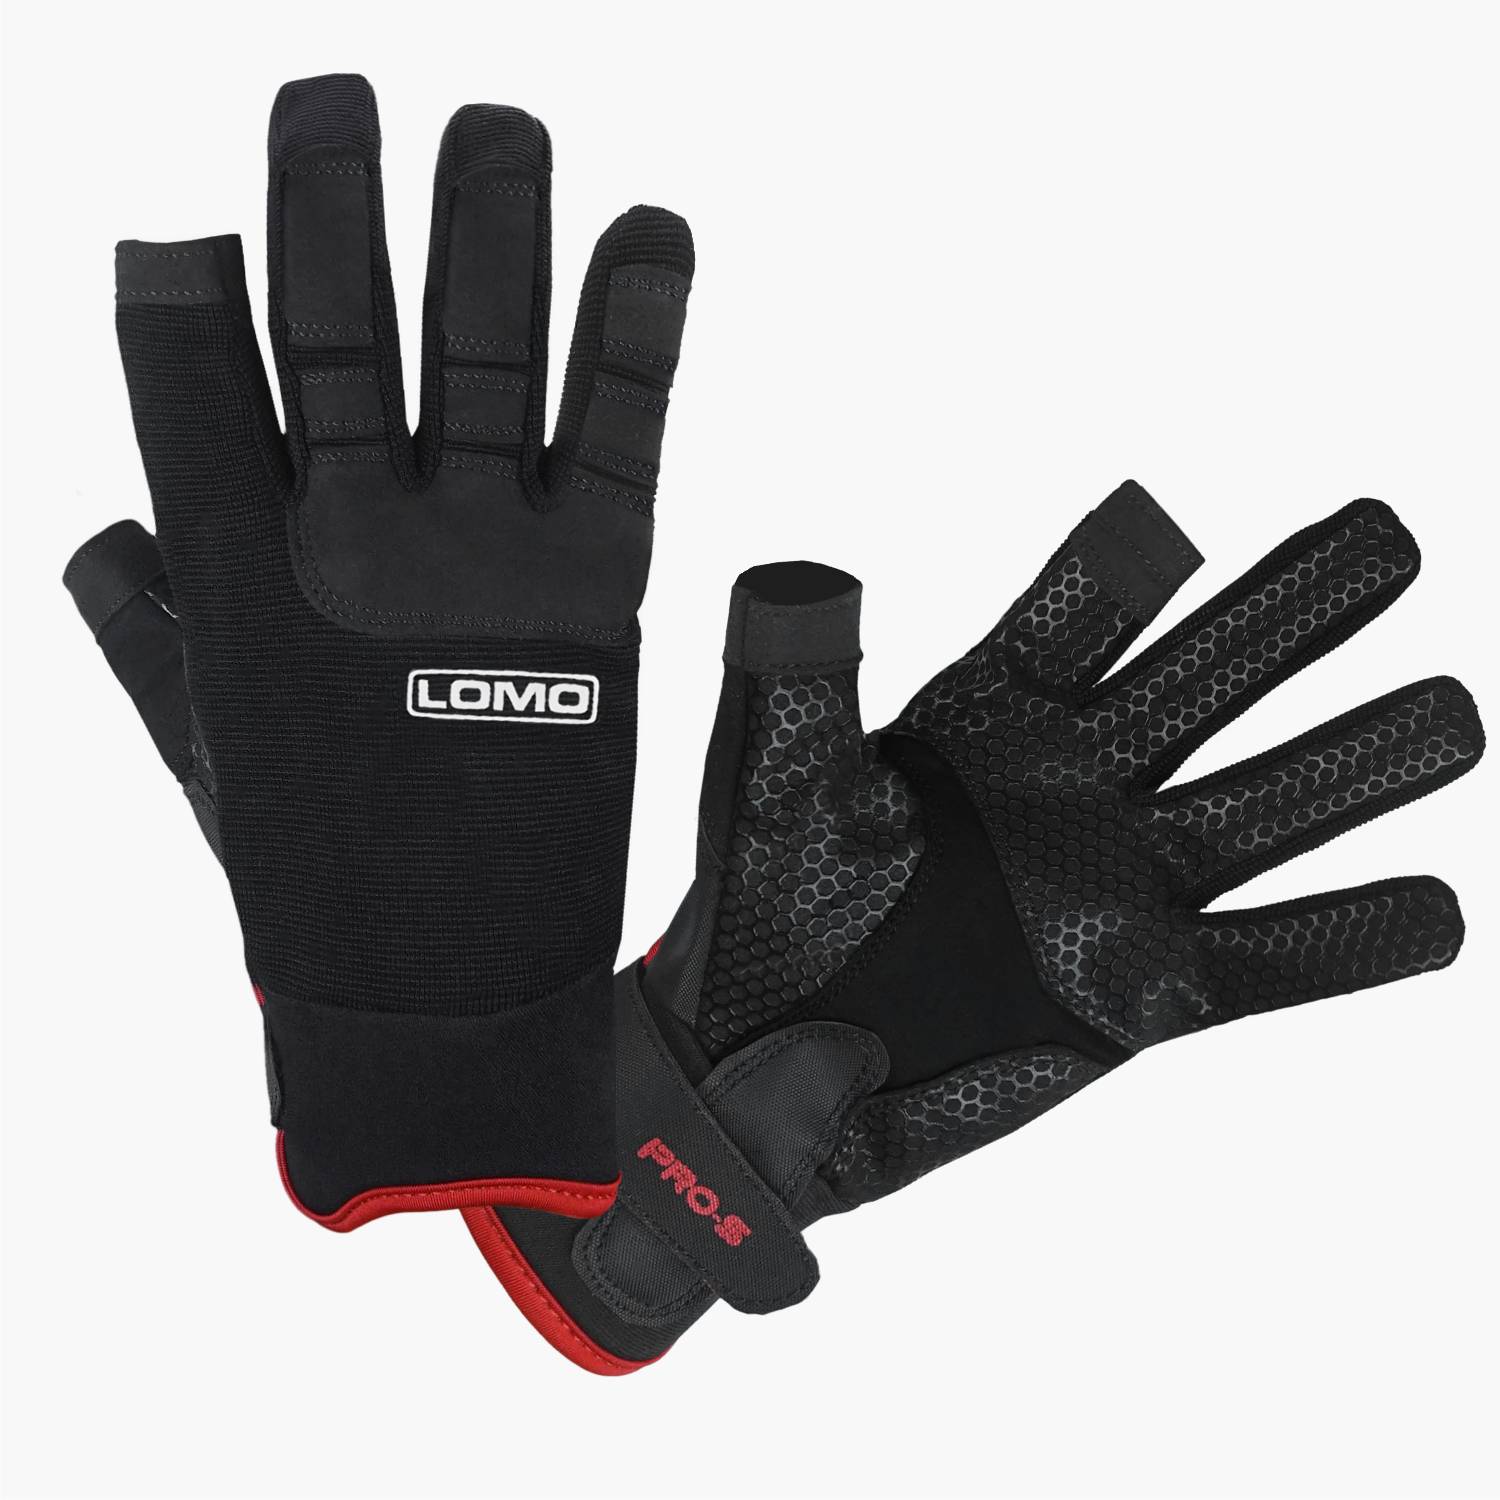 Gloves | Lomo Watersport UK. Wetsuits, Dry Bags & Outdoor Gear.